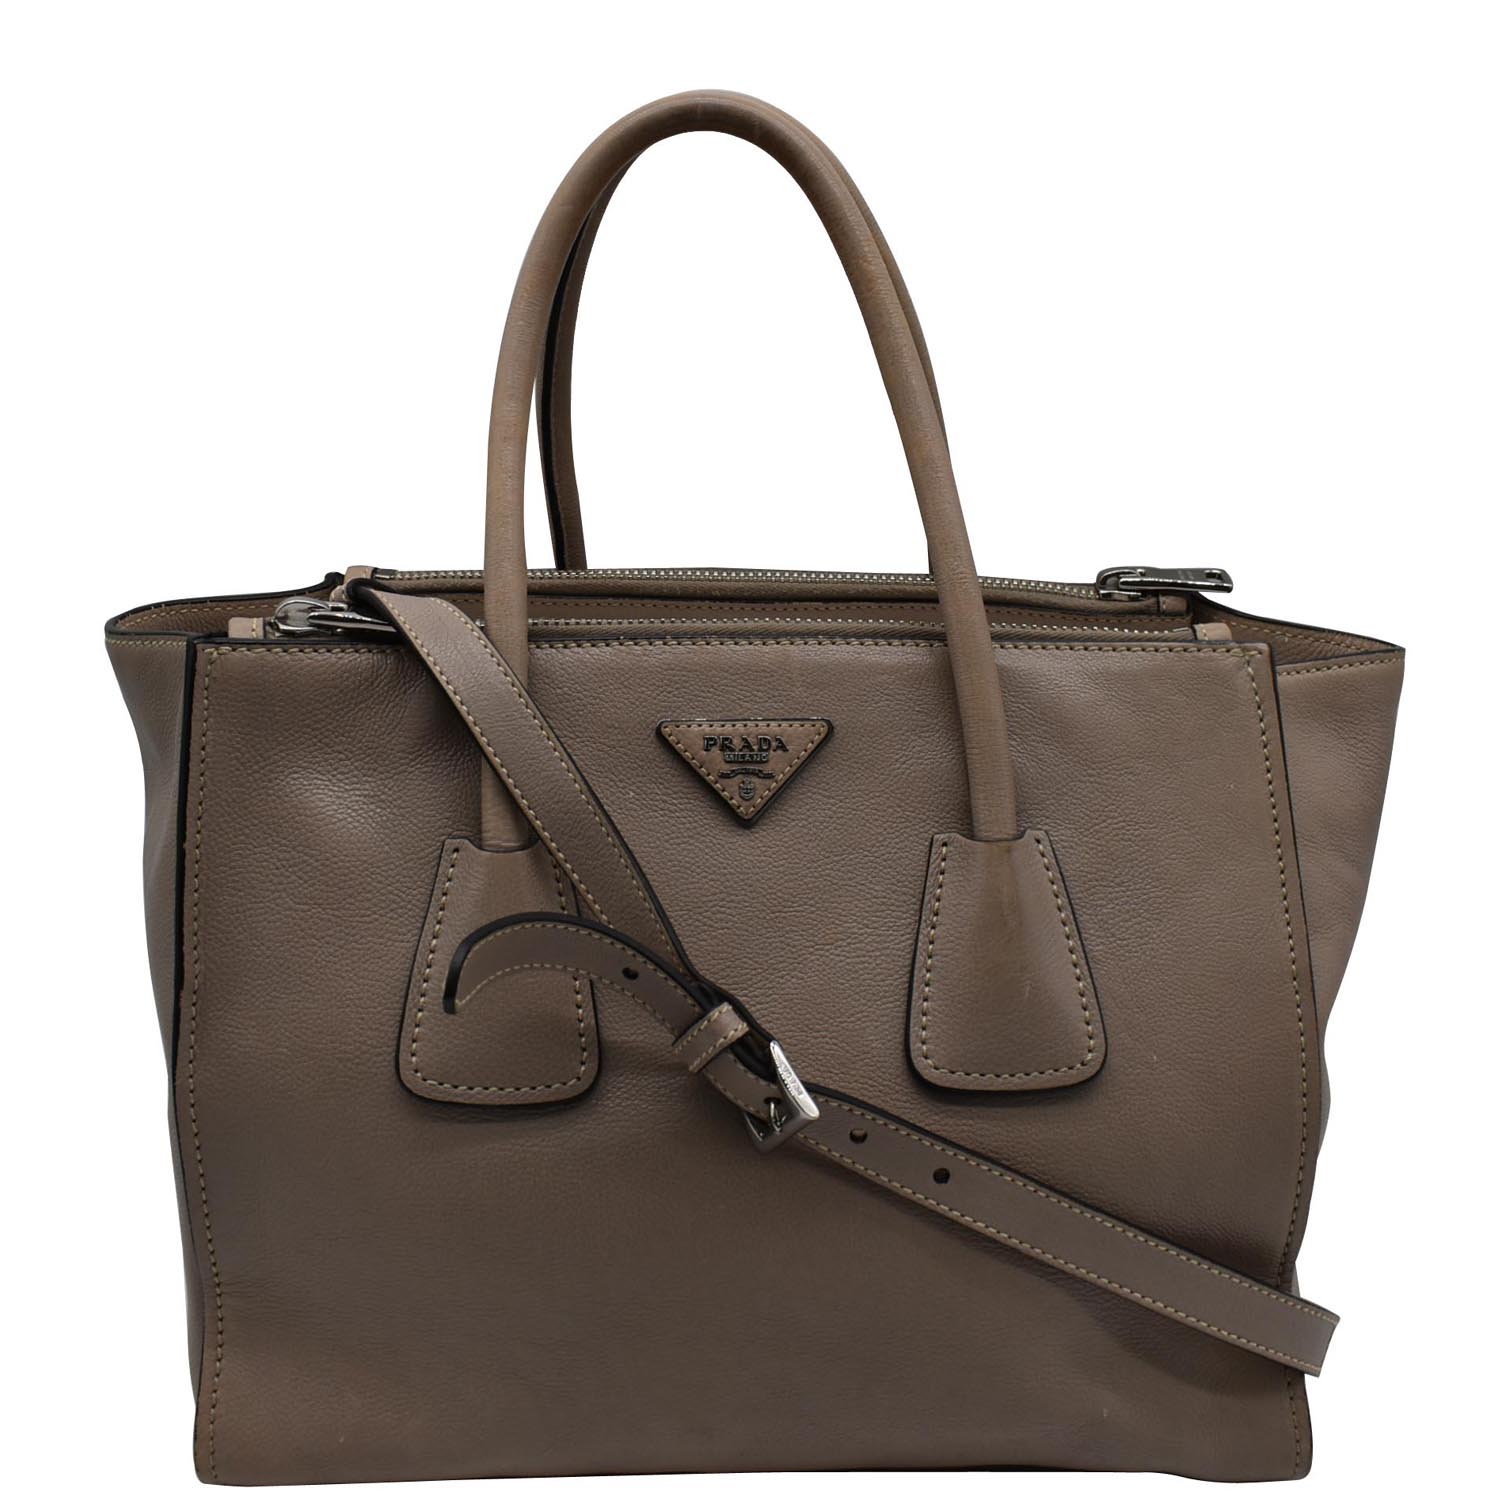 Prada Saffiano Lux Leather Messenger Bag Taupe